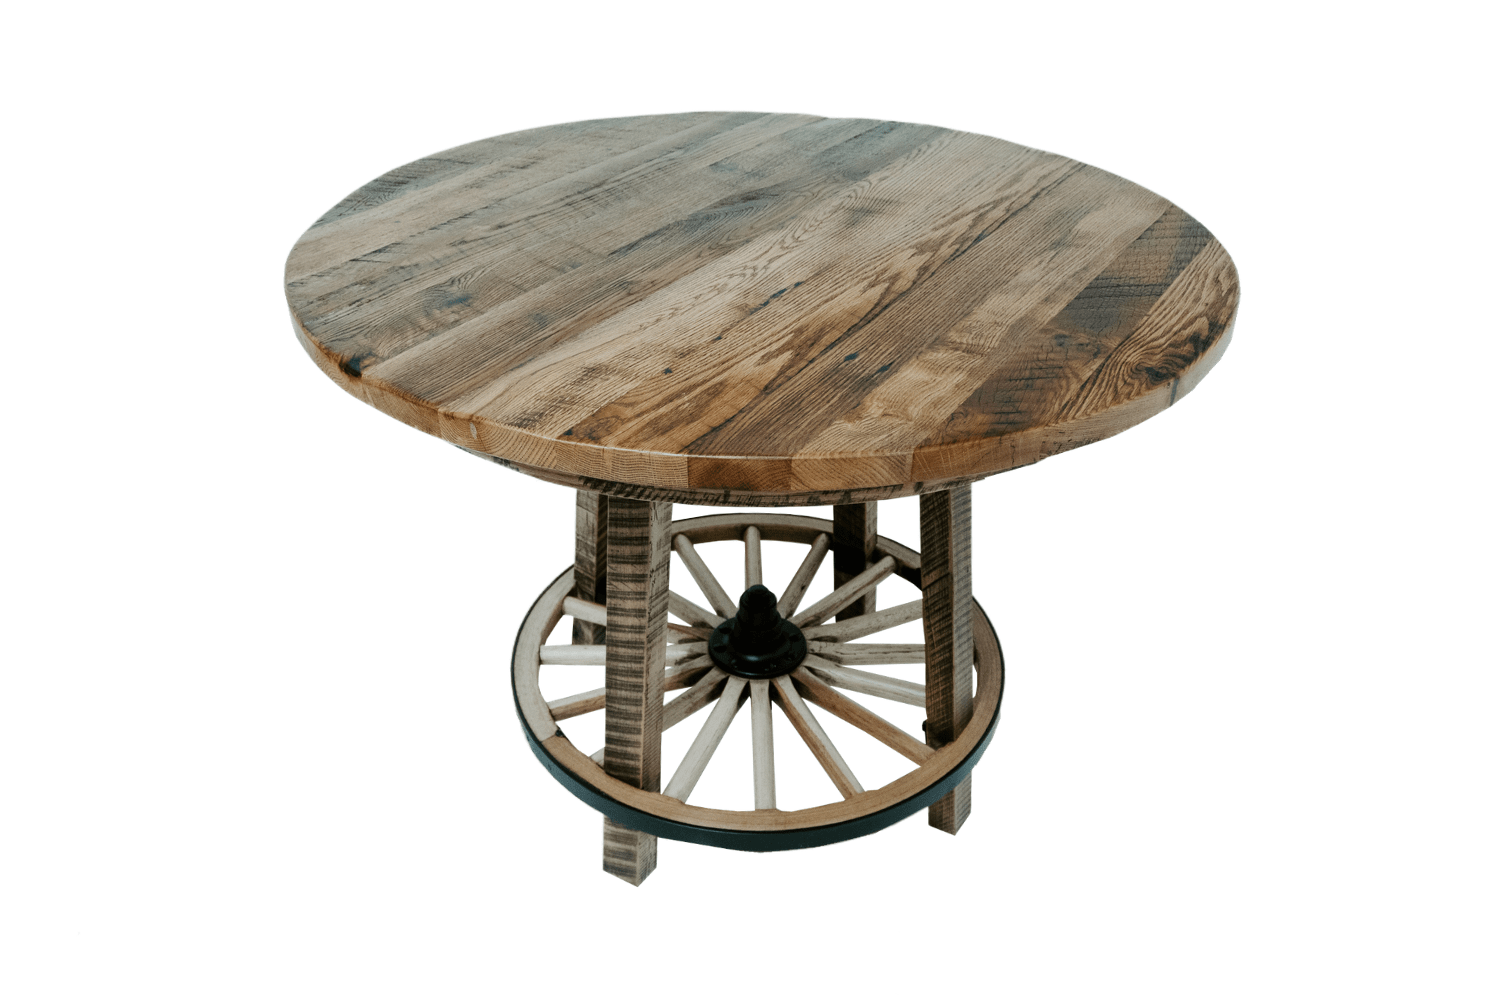 Wagon Wheel Barnwood Table